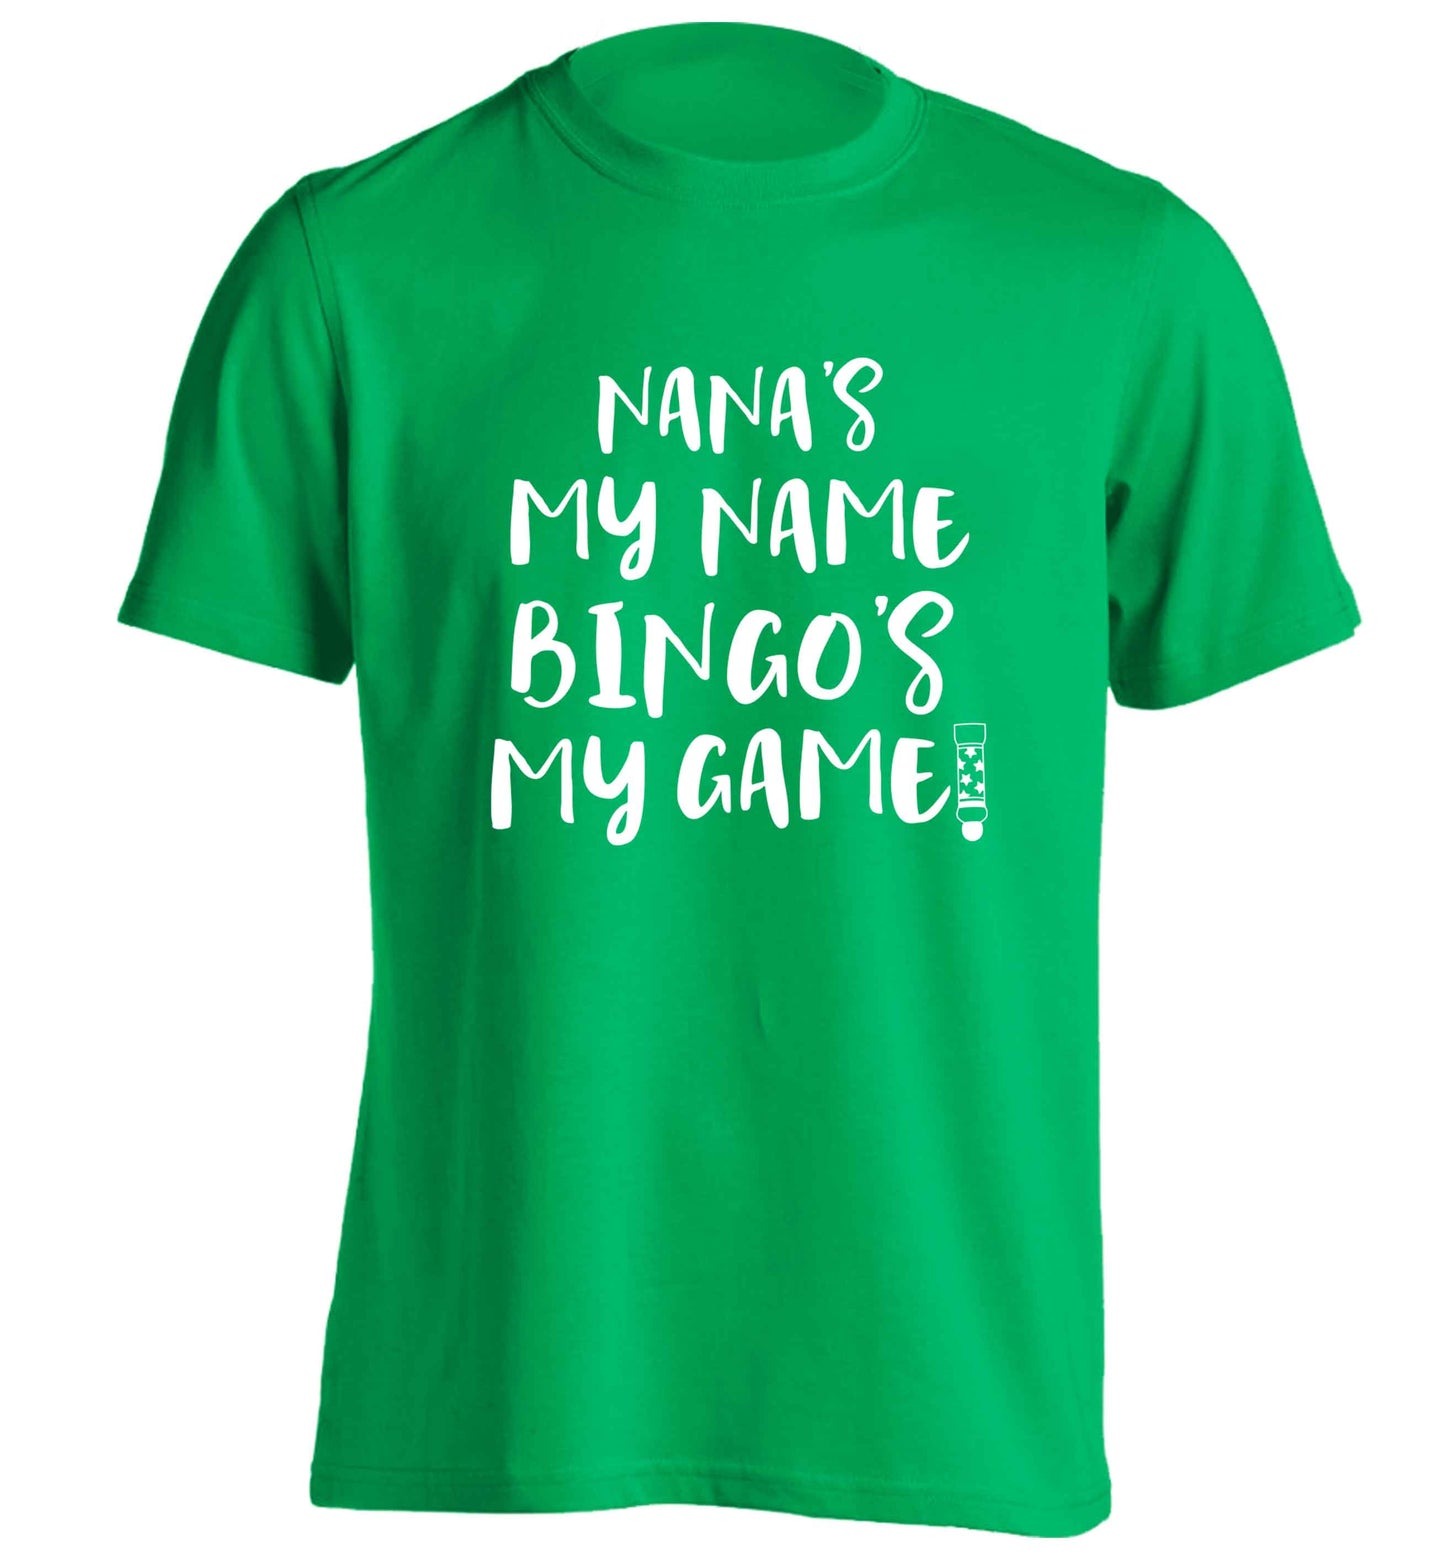 Nana's my name bingo's my game! adults unisex green Tshirt 2XL